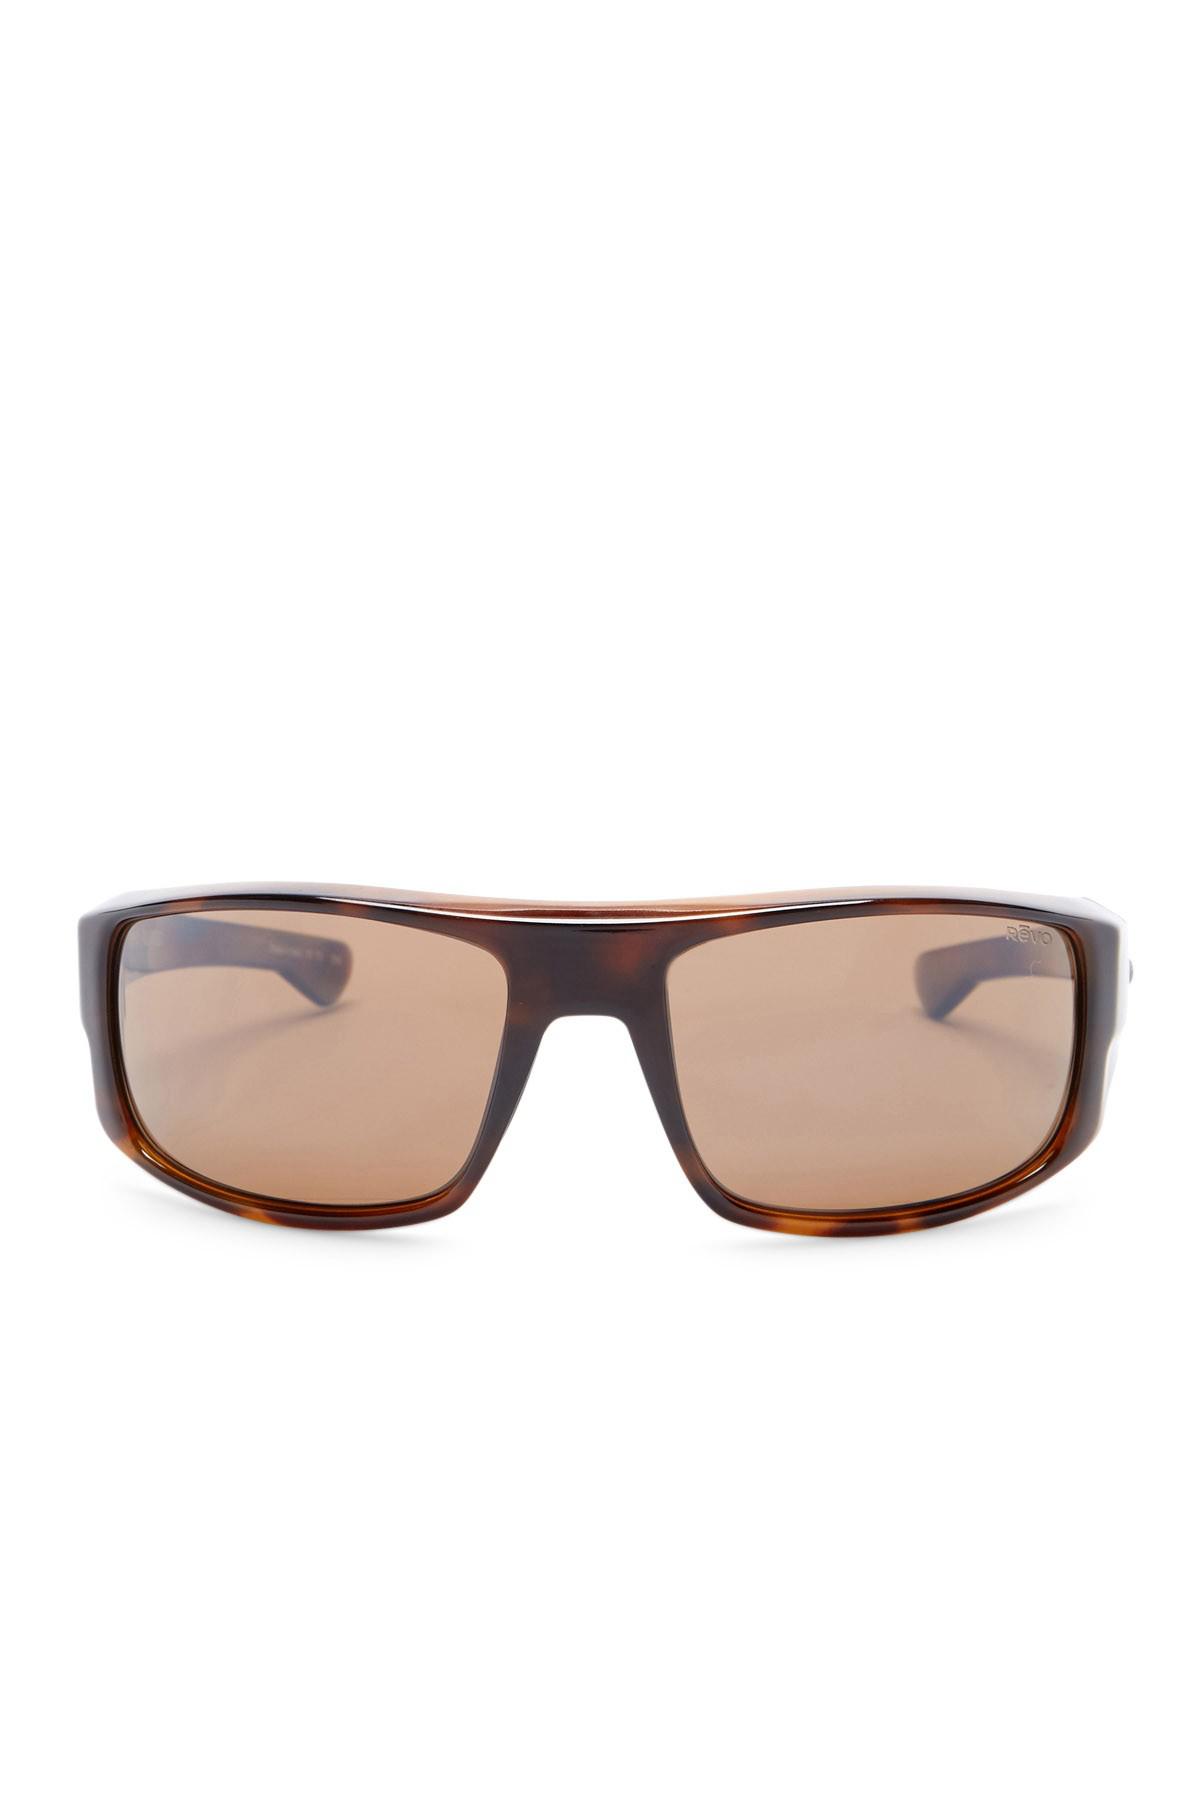 Revo Dash Polarized 60mm Wrap Sunglasses in Brown for Men - Lyst